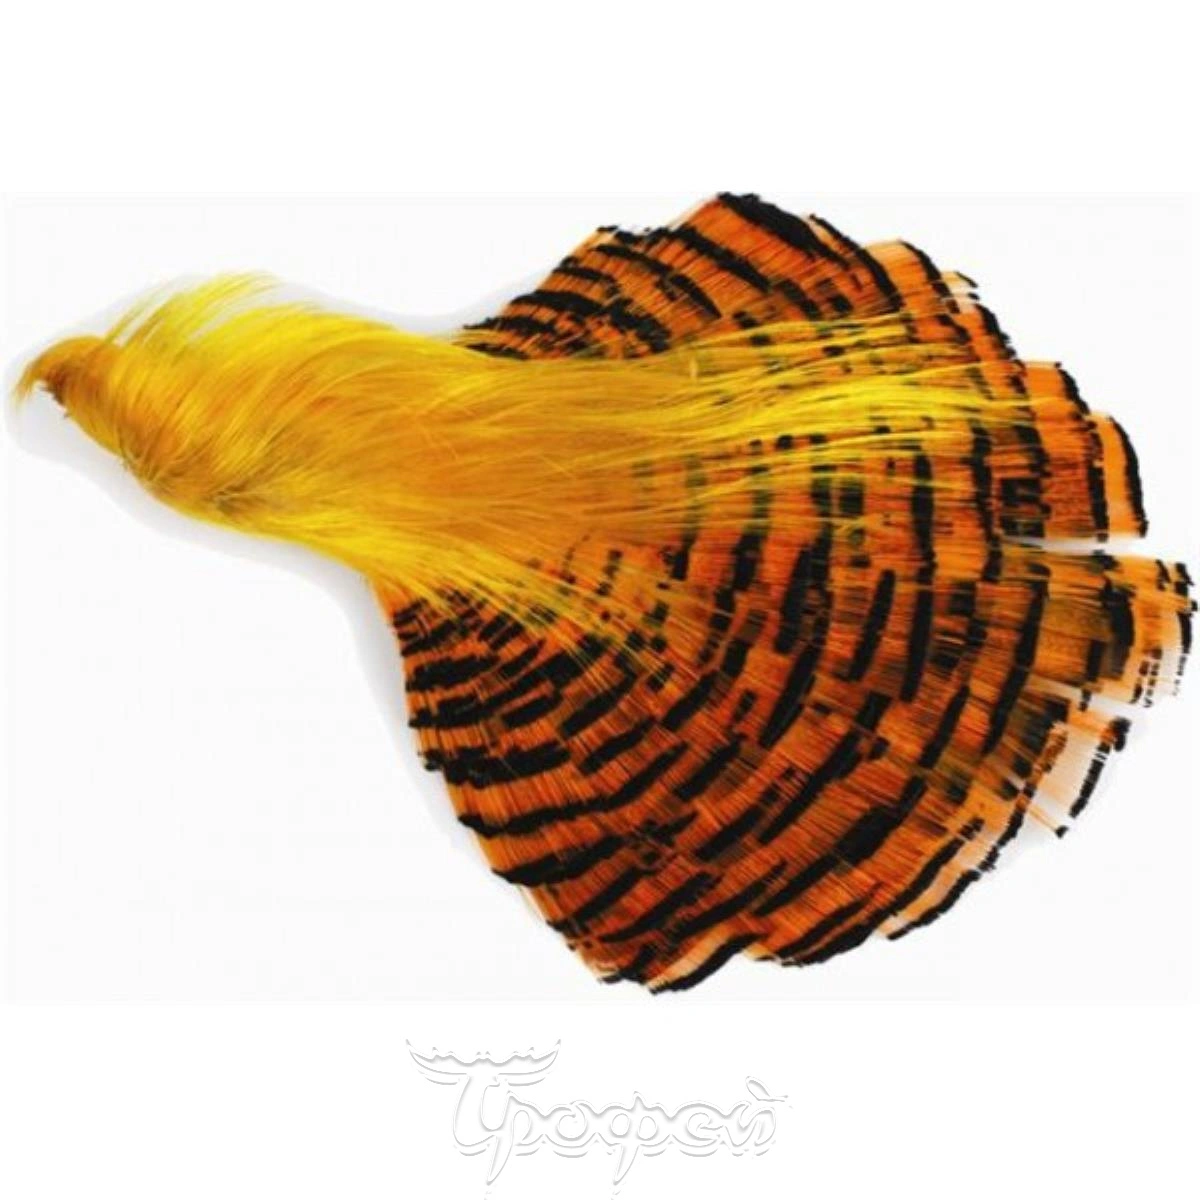 Fly-Fishing шейные перья золотого фазана Golden Pheasant Tippets large natural. Скальп золотого фазана. Fly-Fishing шейные перья золотого фазана Golden Pheasant Tippets Medium Black.